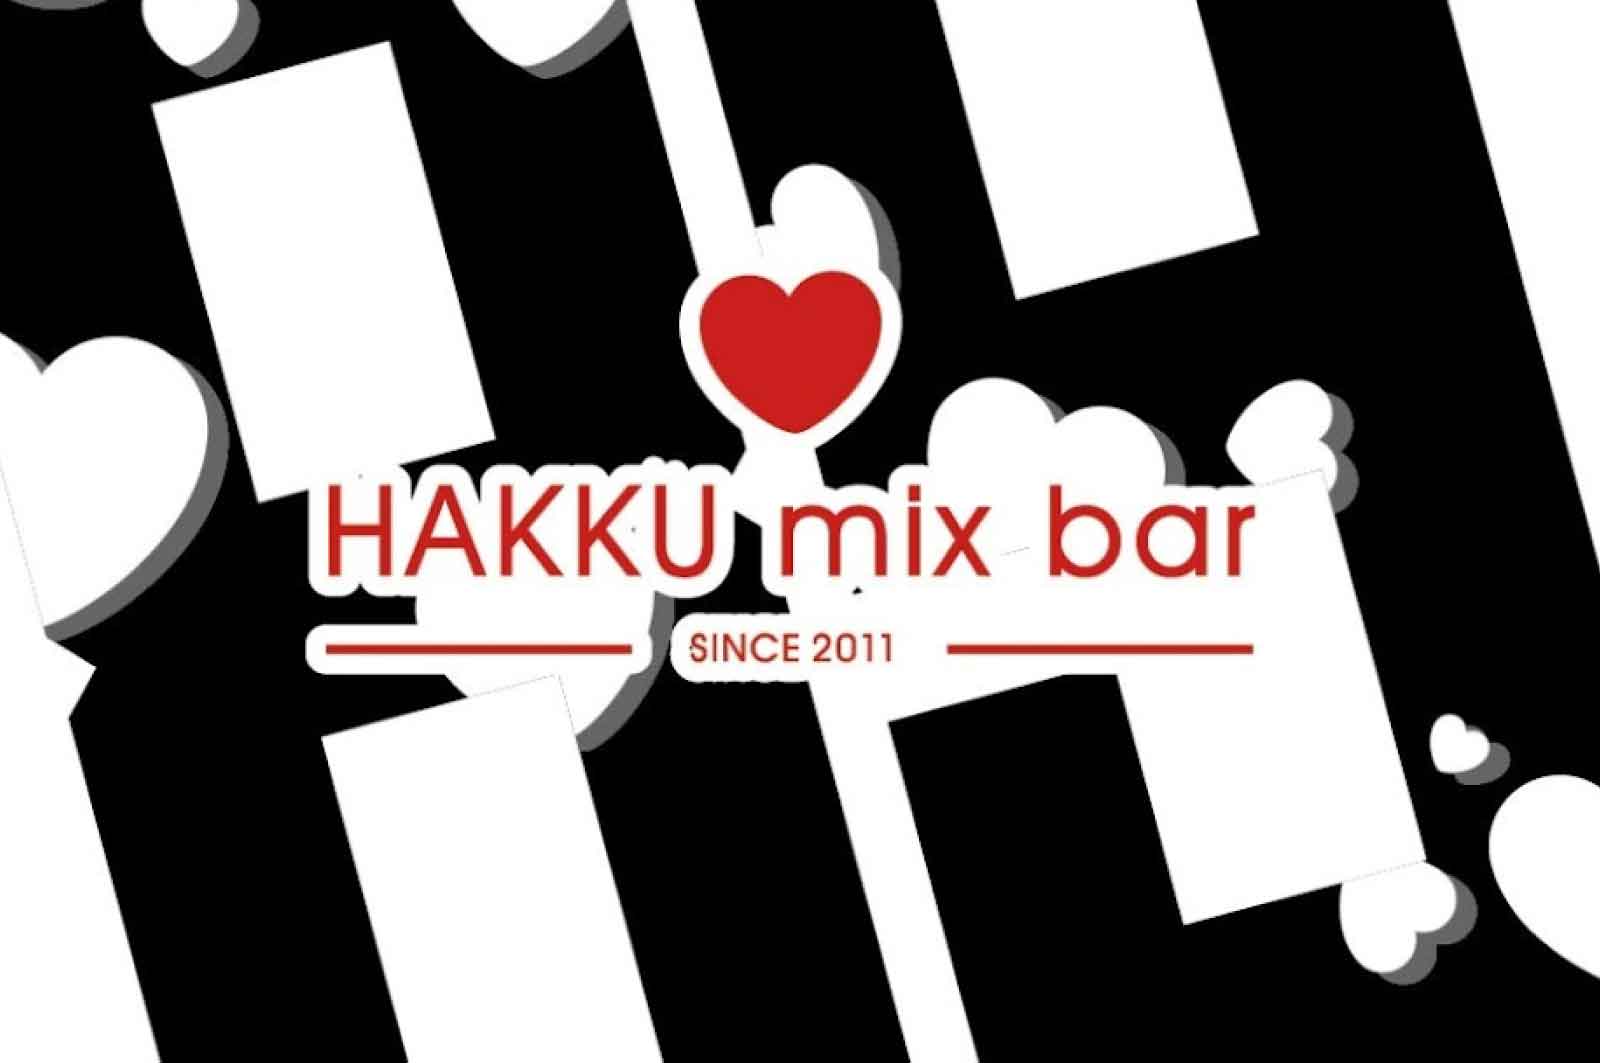 HAKKU mix bar